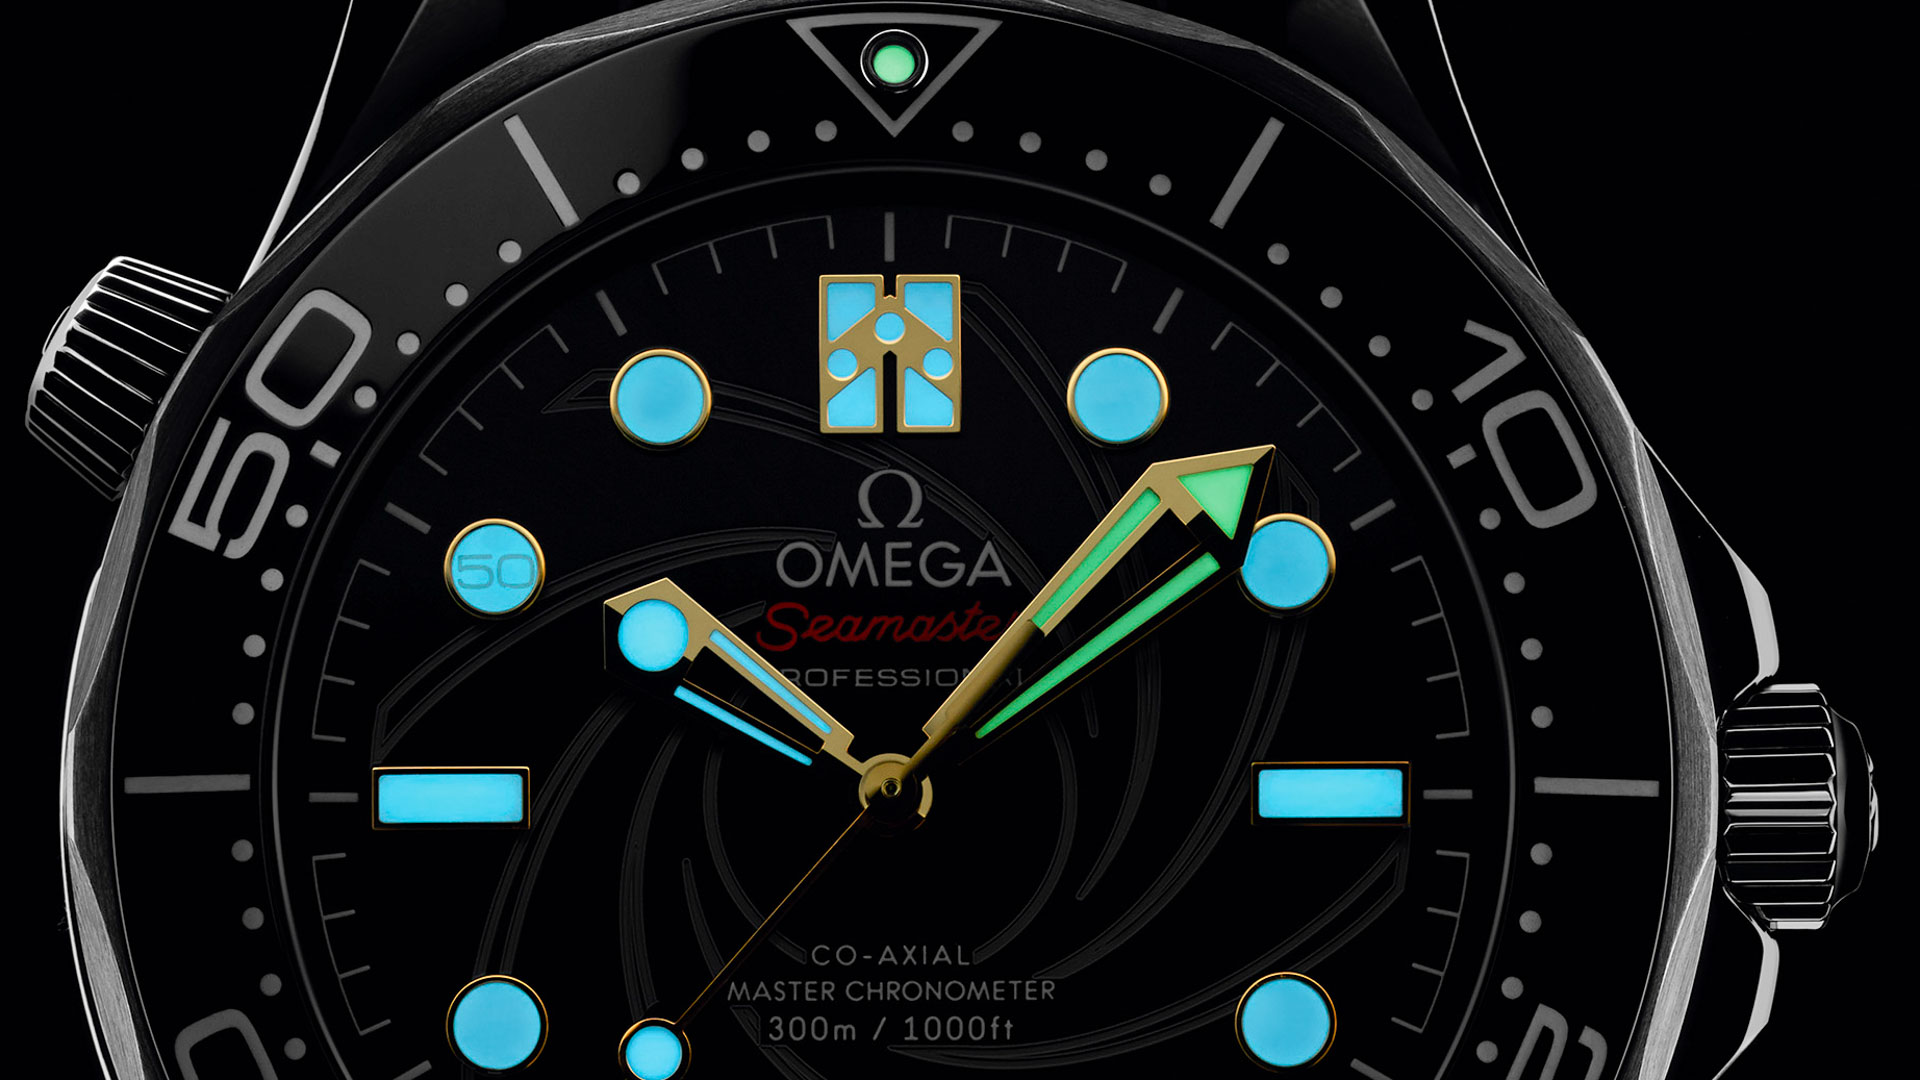 omega watch service near me